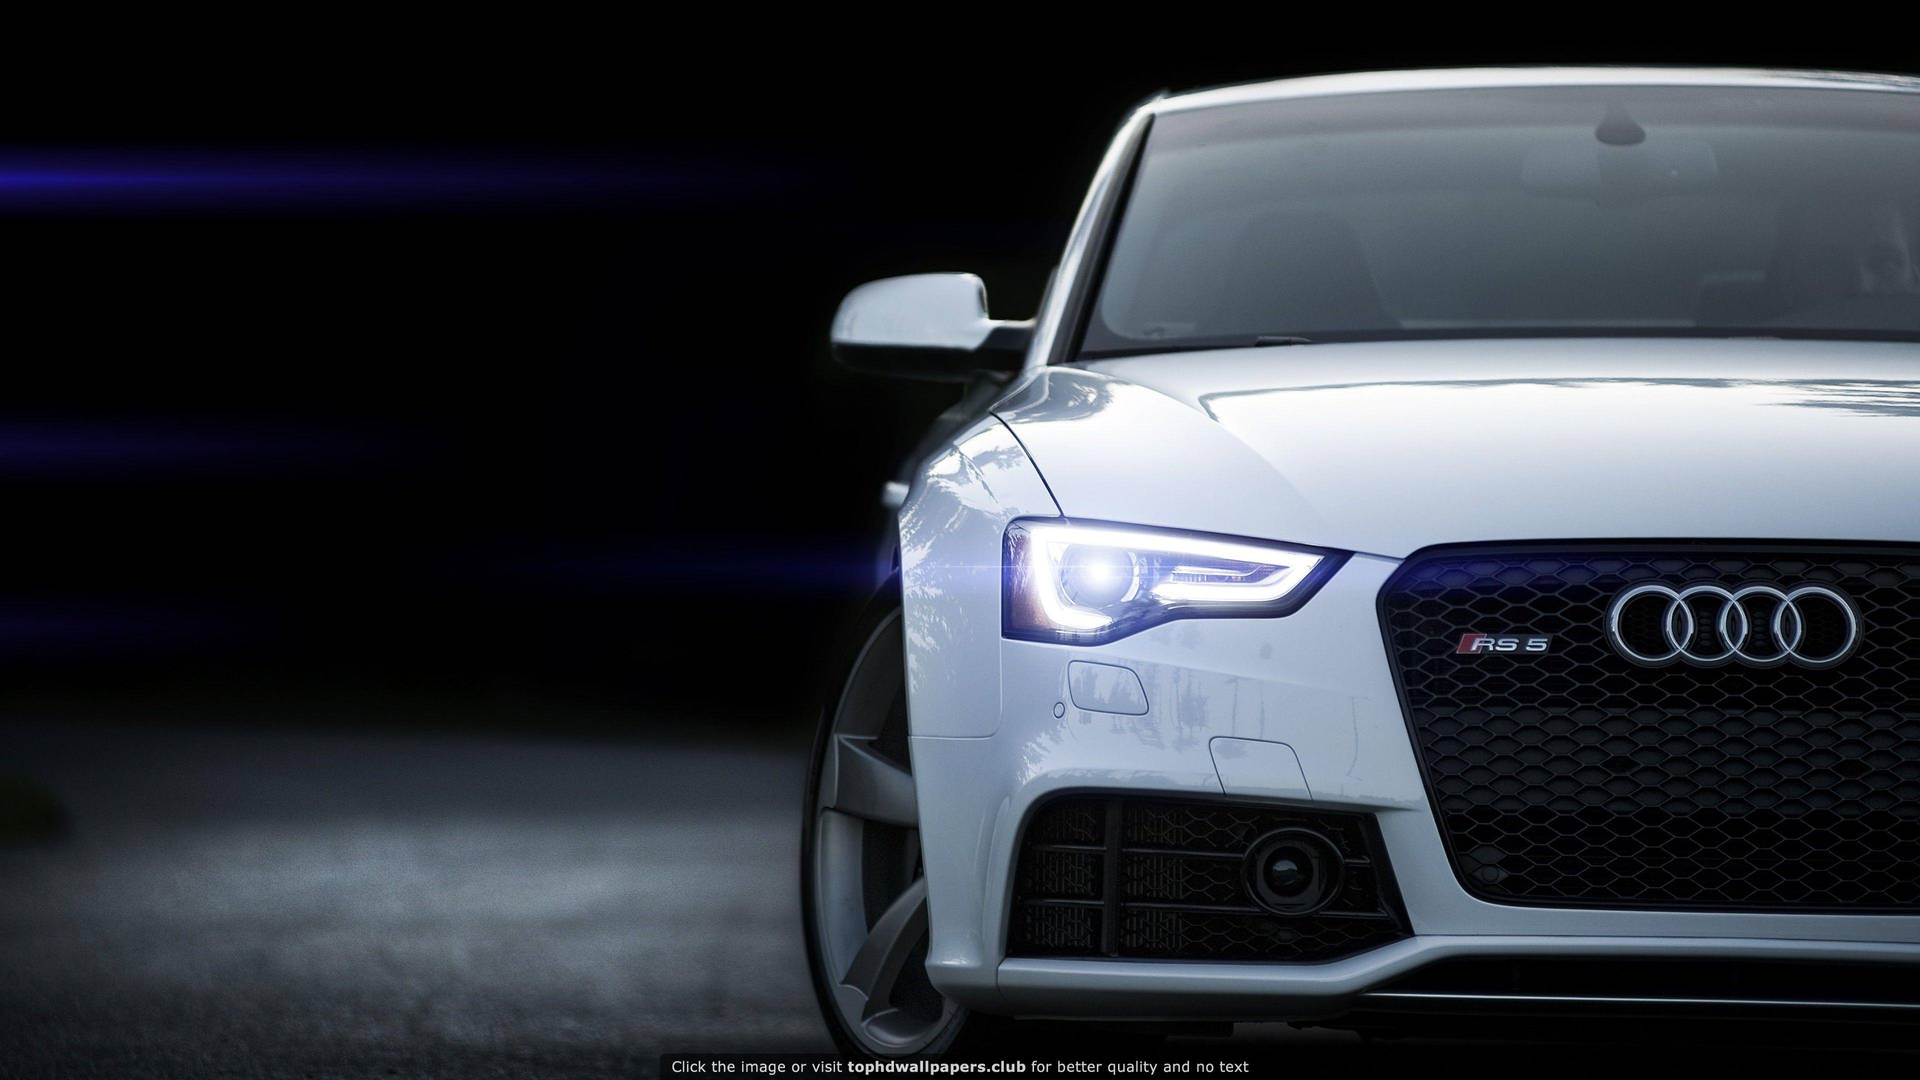 Pioneering Design - Closeup Shot Of 2014 Audi Rs 5 Headlight